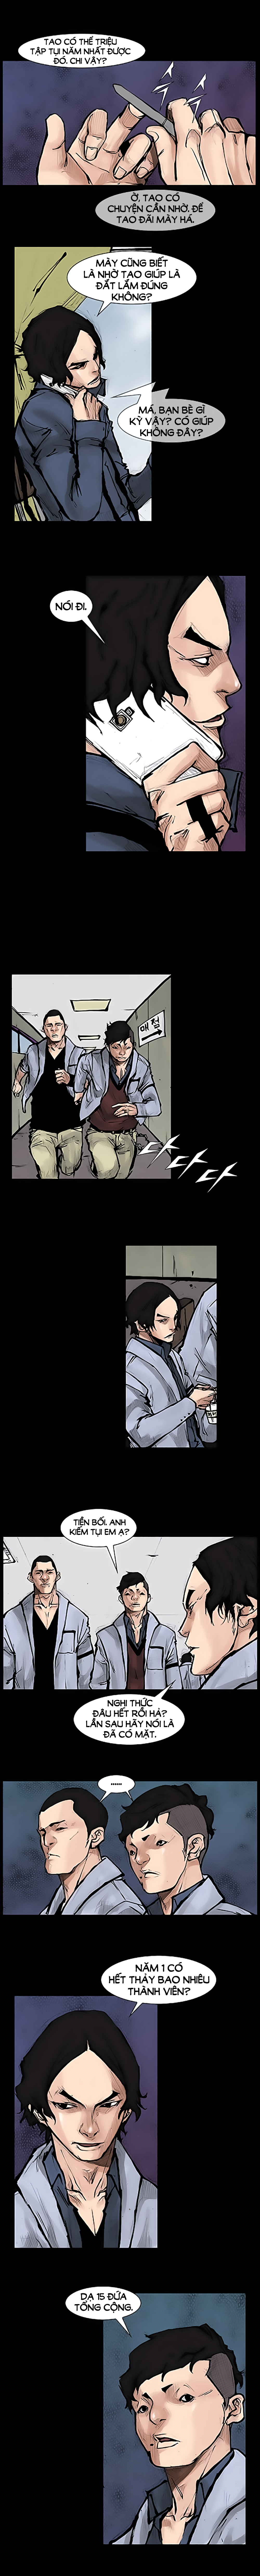 Dokgo Rewind kỳ 9 trang 5